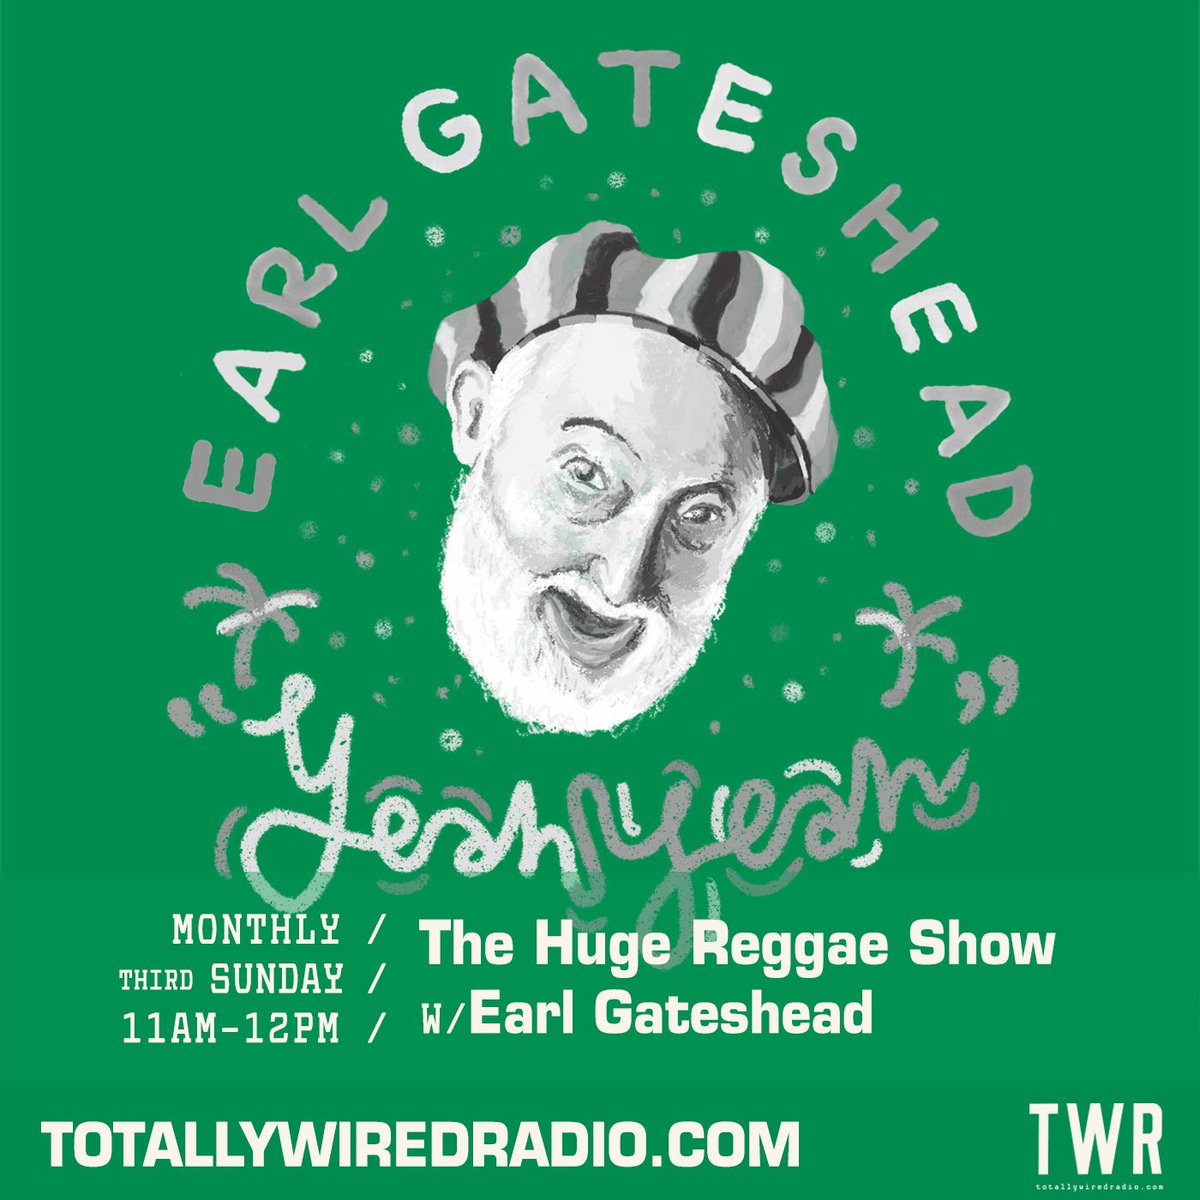 The Huge Reggae Show w/ Earl Gateshead #startingsoon on #TotallyWiredRadio Listen @ Link in bio. - #MusicIsLife #London - #Reggae #Roots #Ska #VinylOnly #Jamaica #Dub